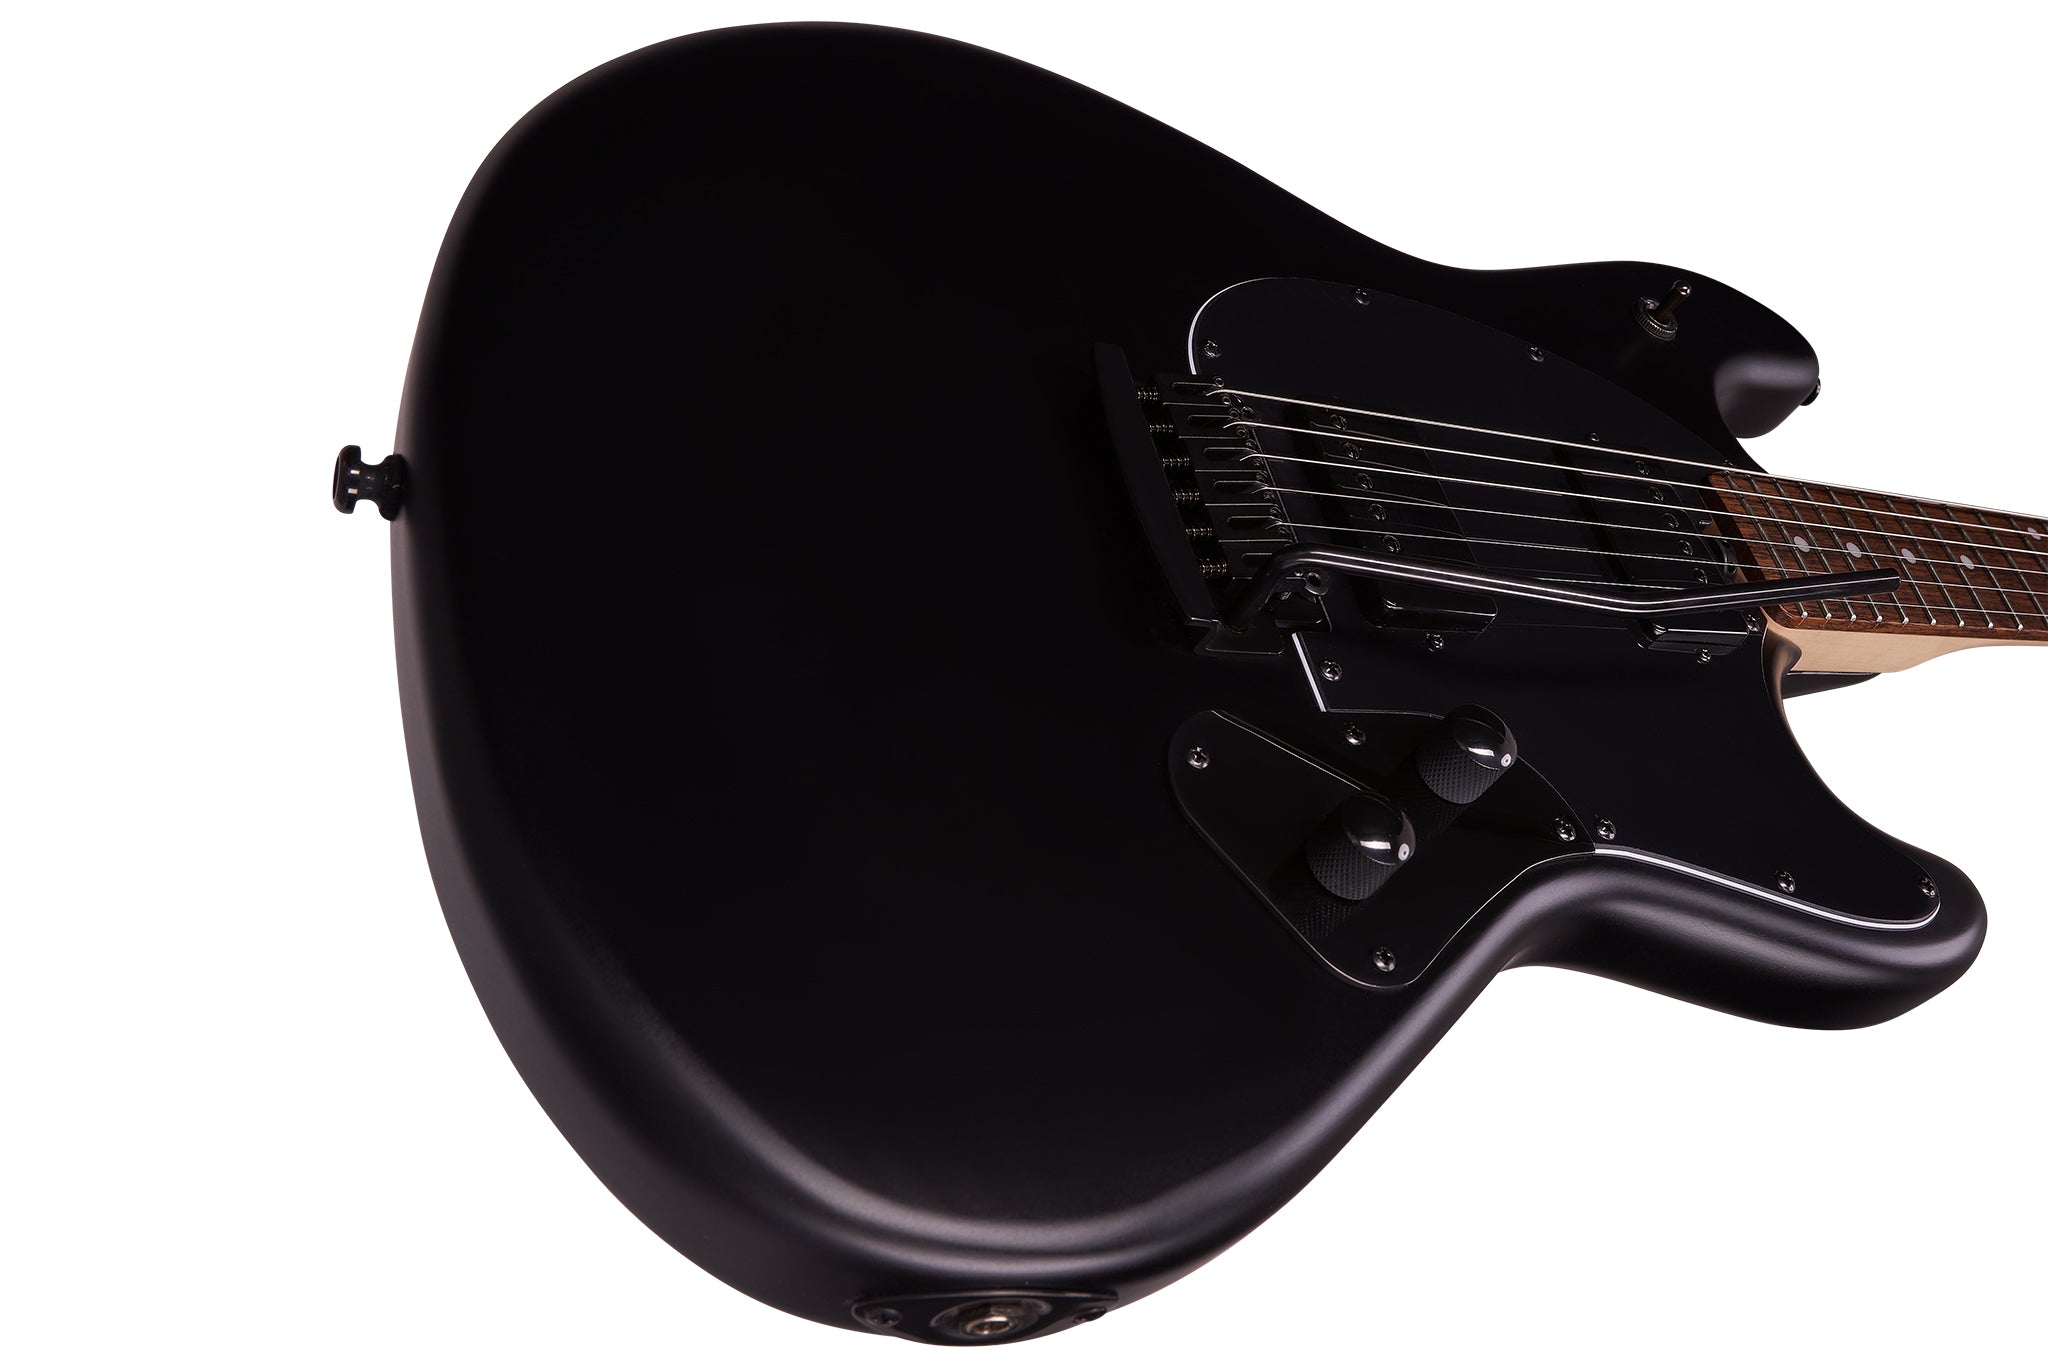 Sterling Music Man SR30 Stingray Stealth Black Electric Guitar "MERCURY" - Open Box